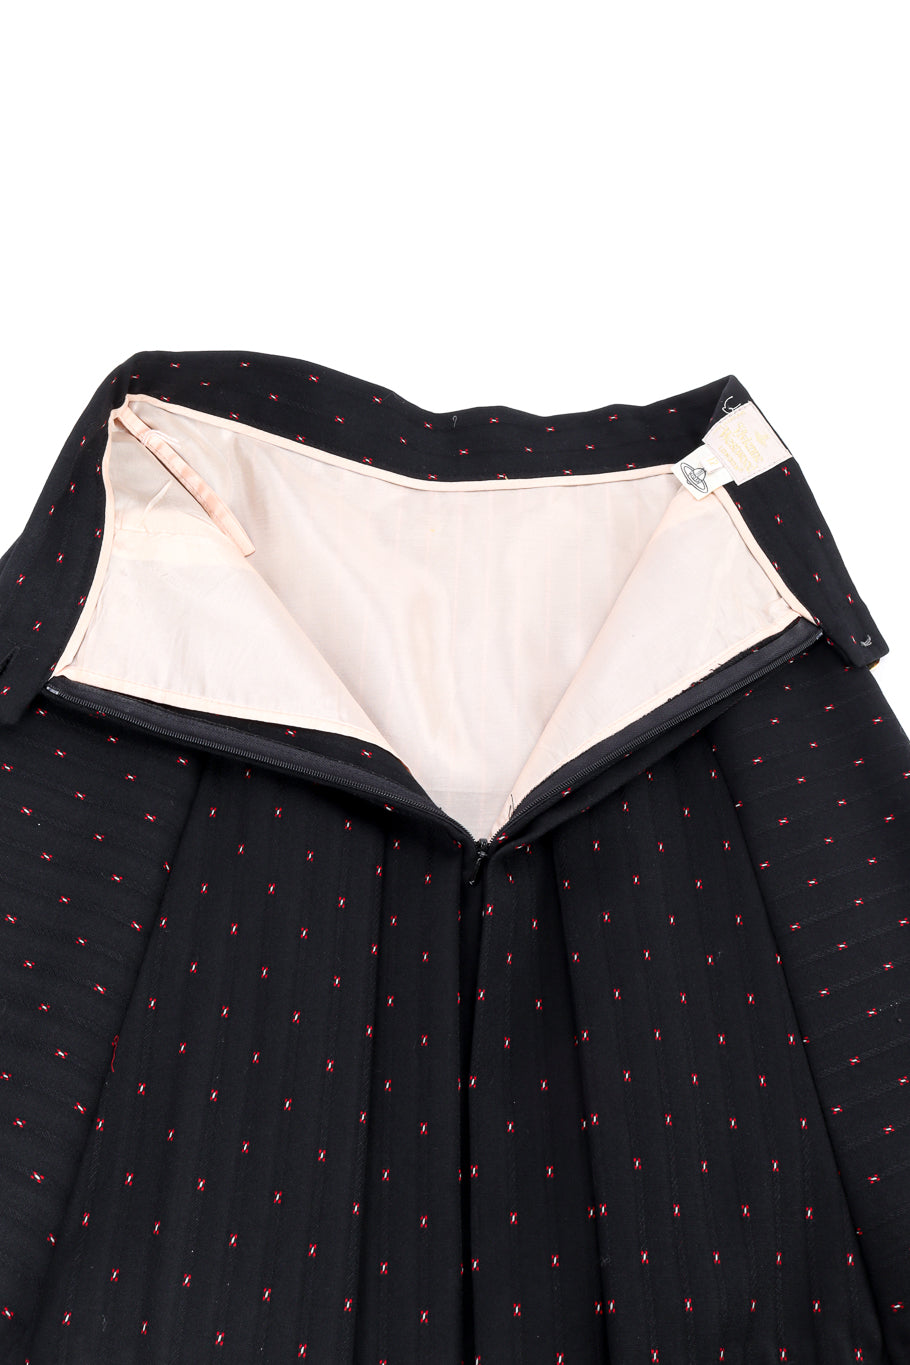 Peplum Flare Jacket & Skirt Suit by Vivienne Westwood skirt unzipped flat @recessla